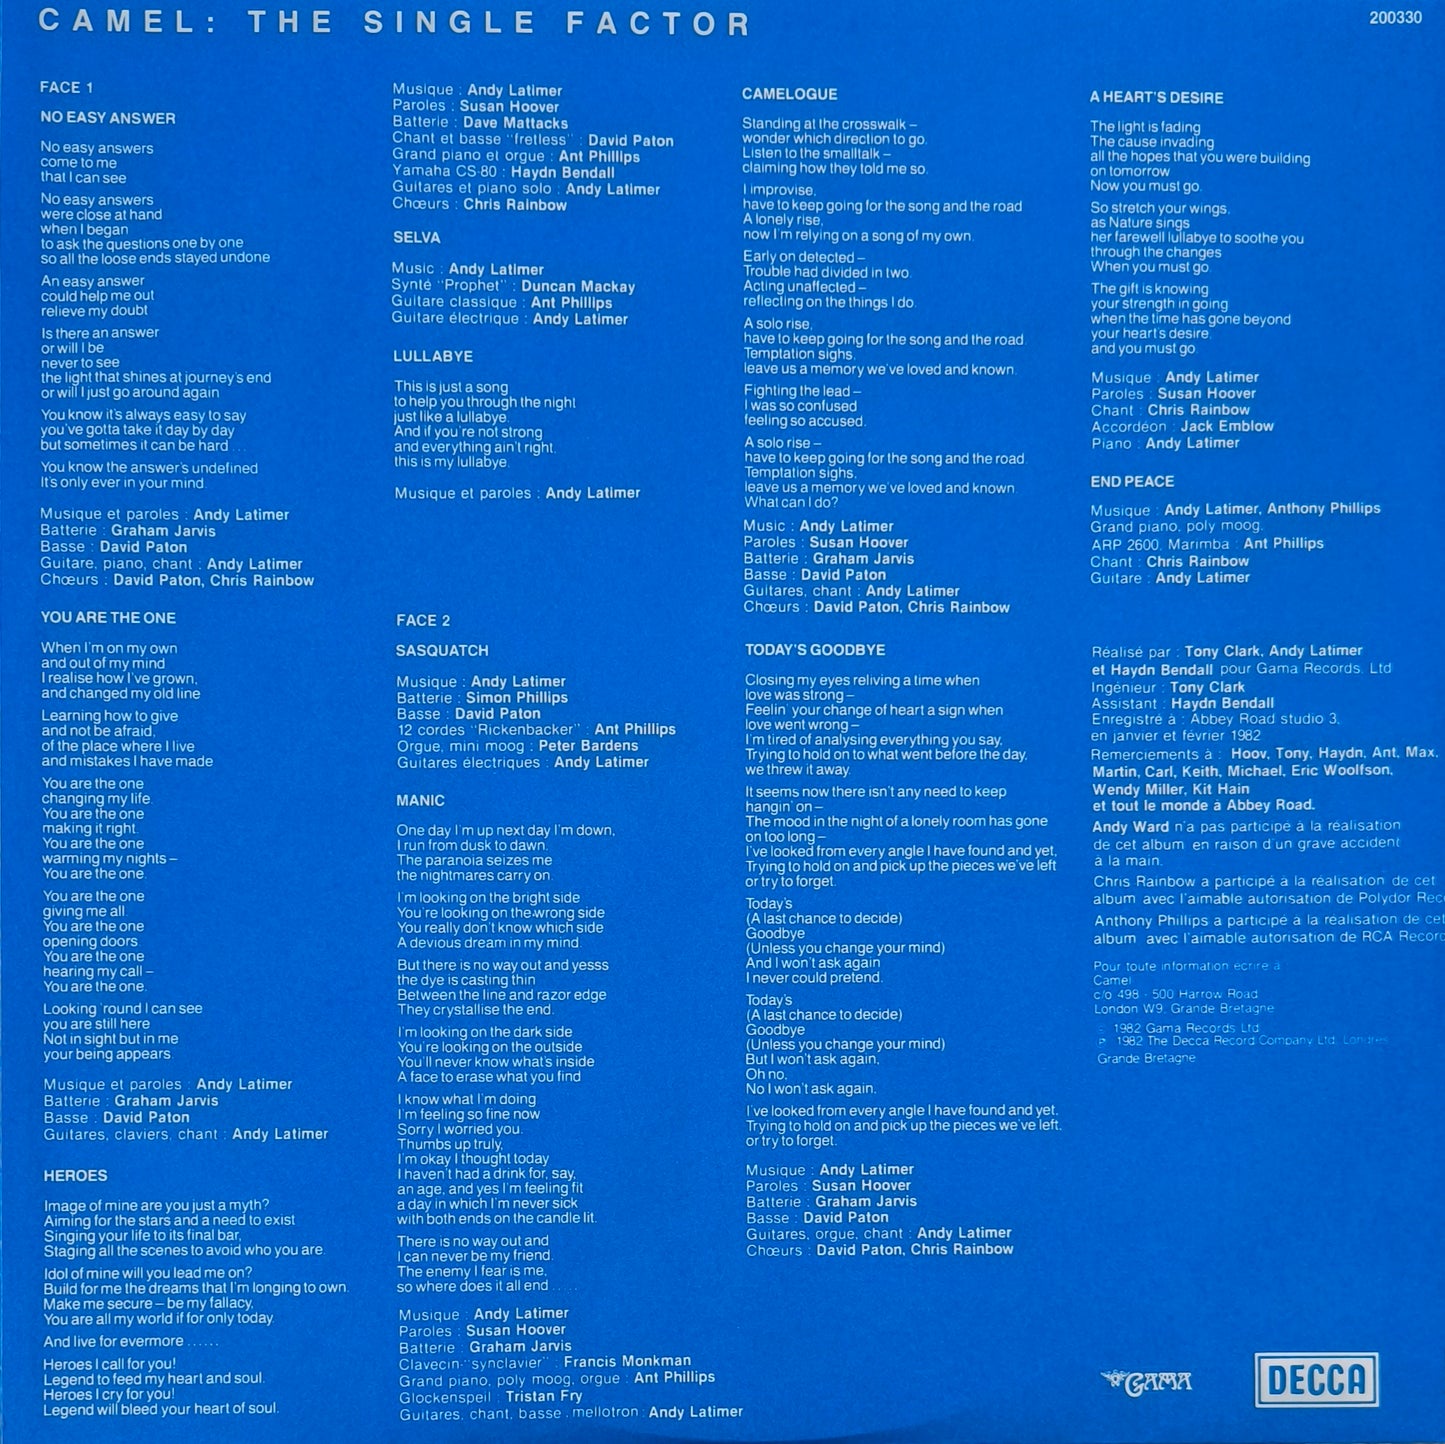 CAMEL - The Single Factor